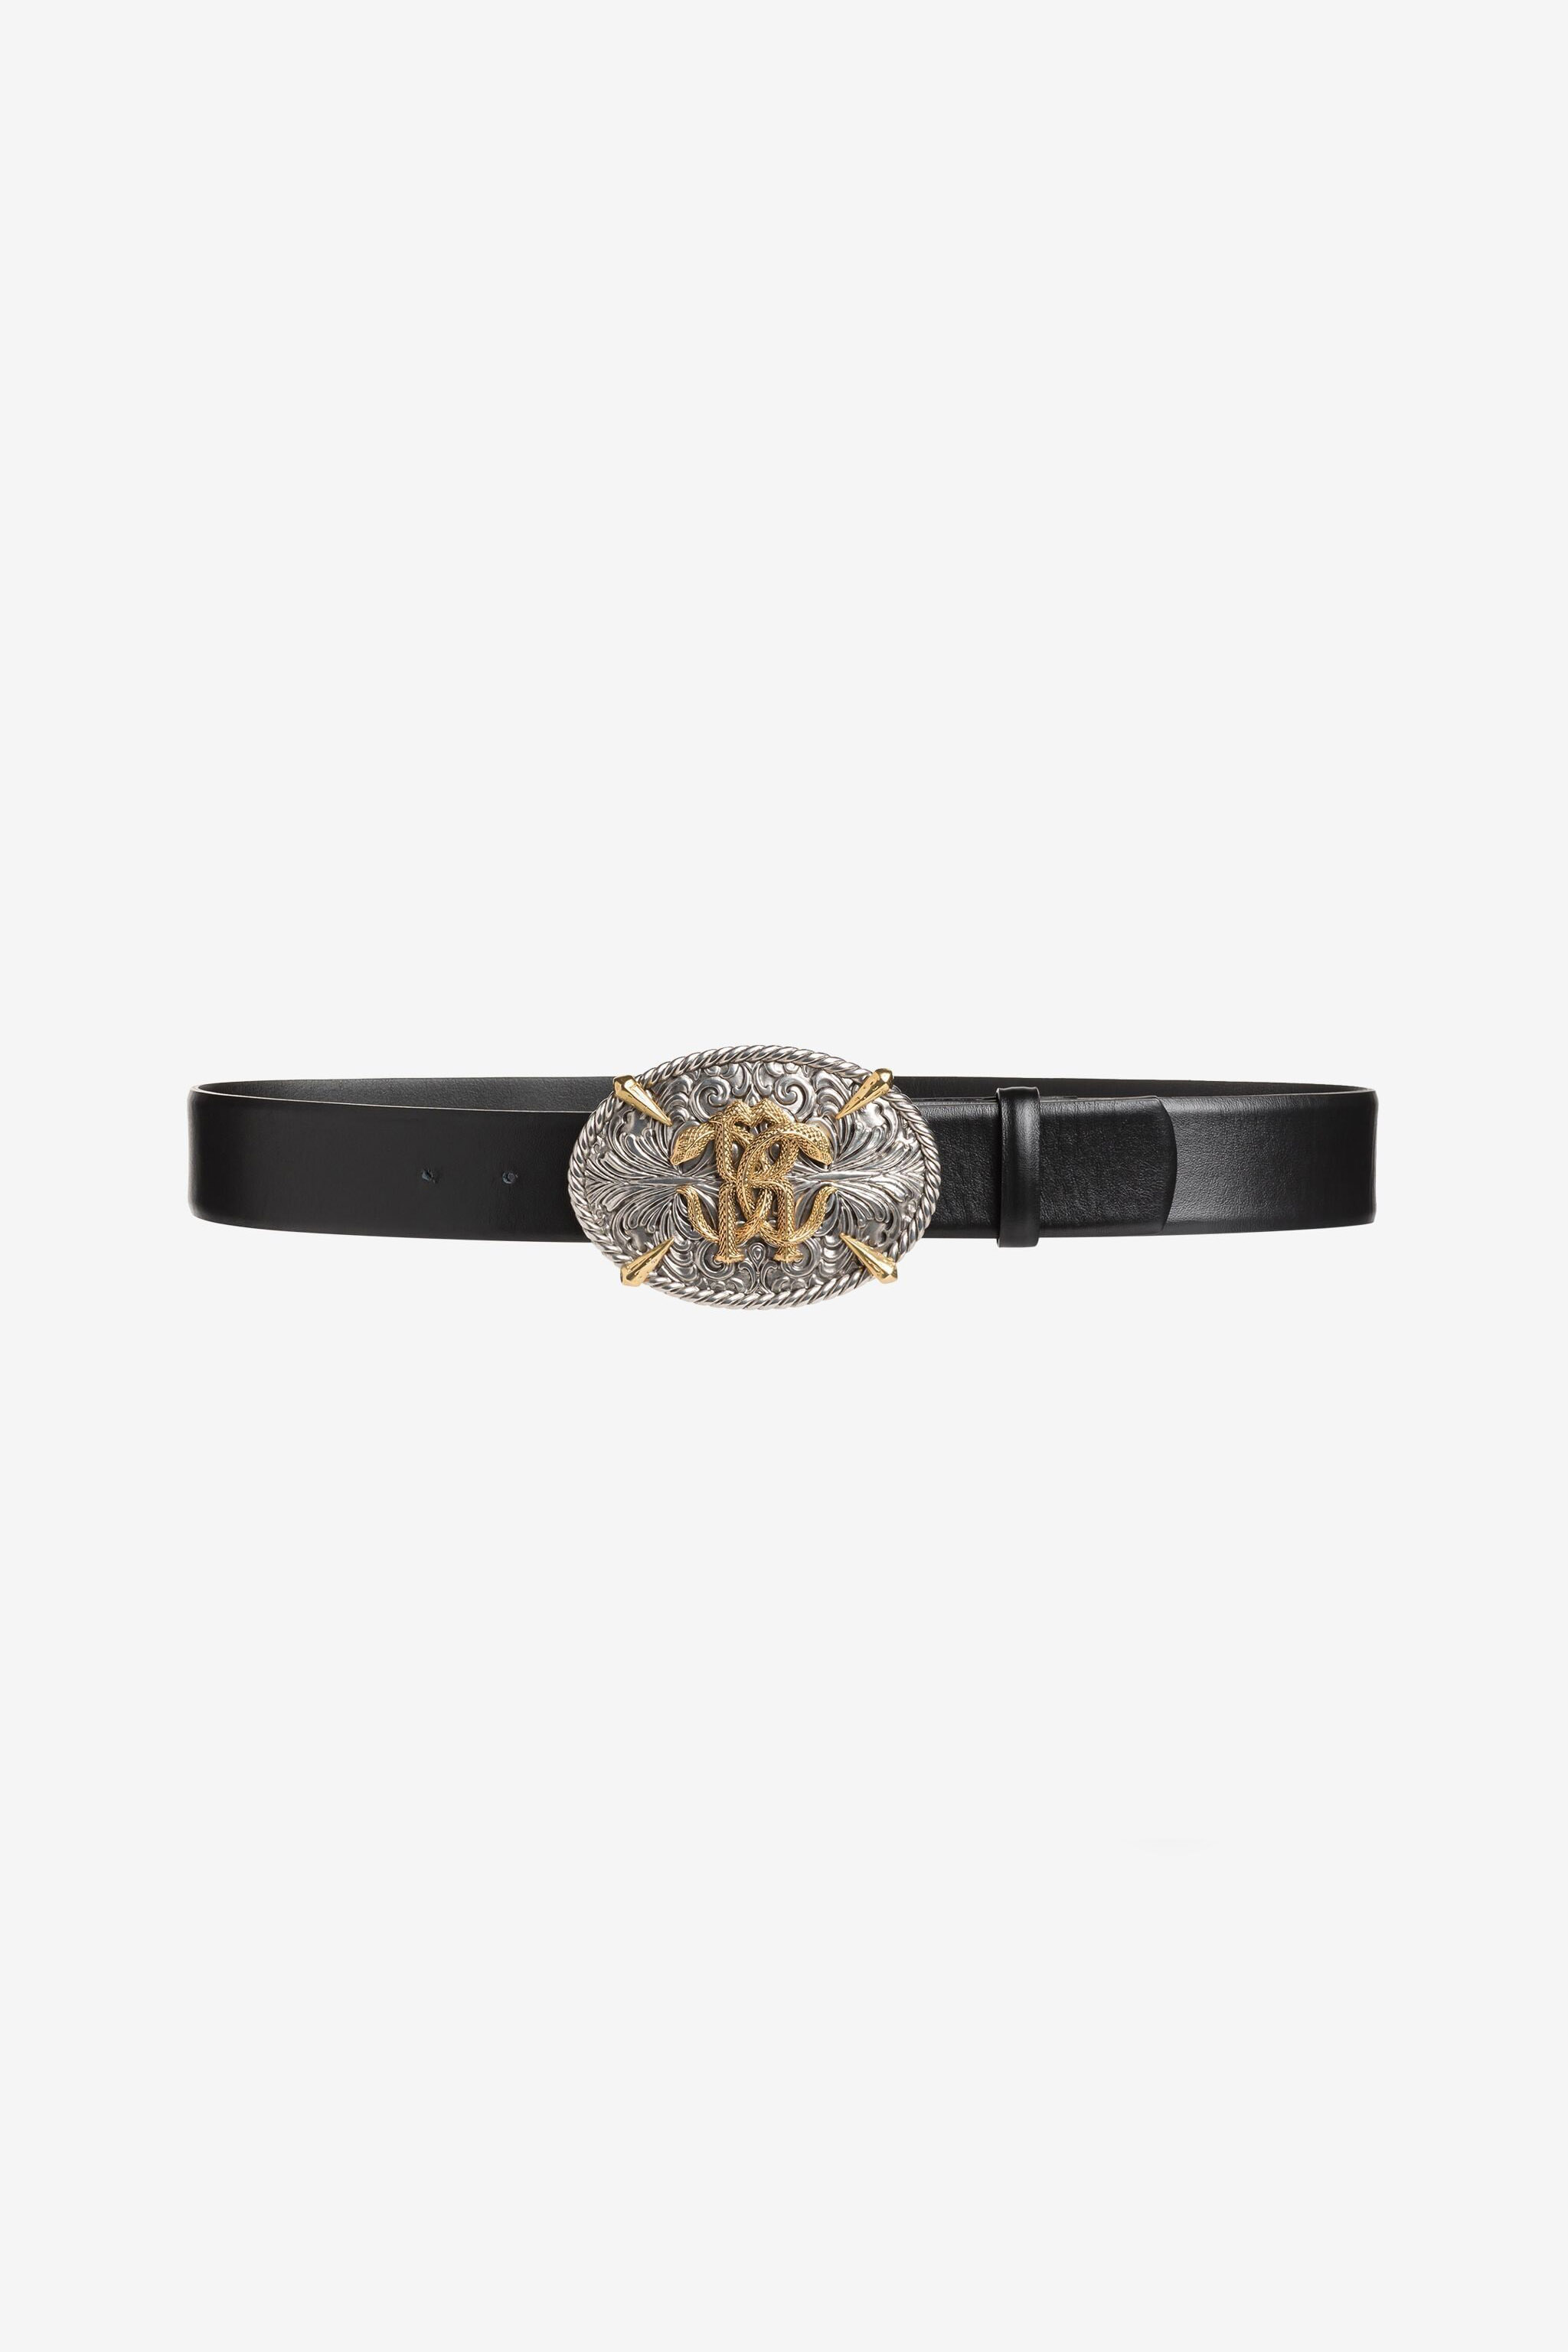 Versace Men's Medusa Buckle Mirror Leather Belt - Silver - Size 105 (42)